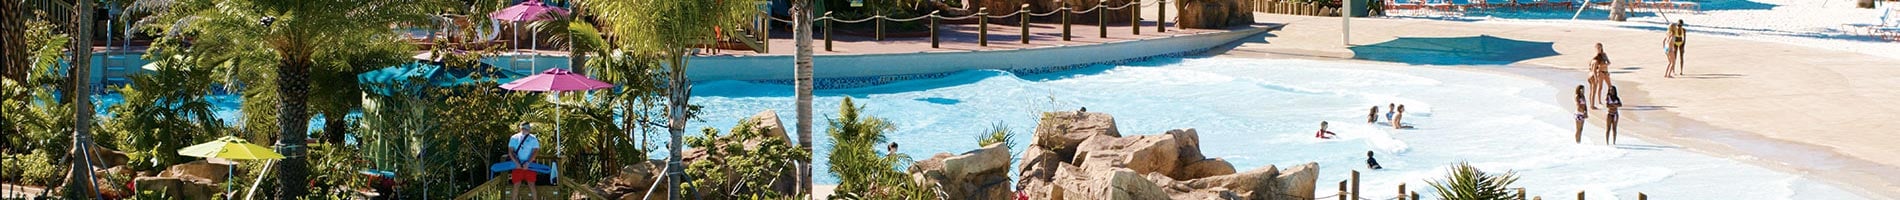 Aquatica Orlando Wave Pool